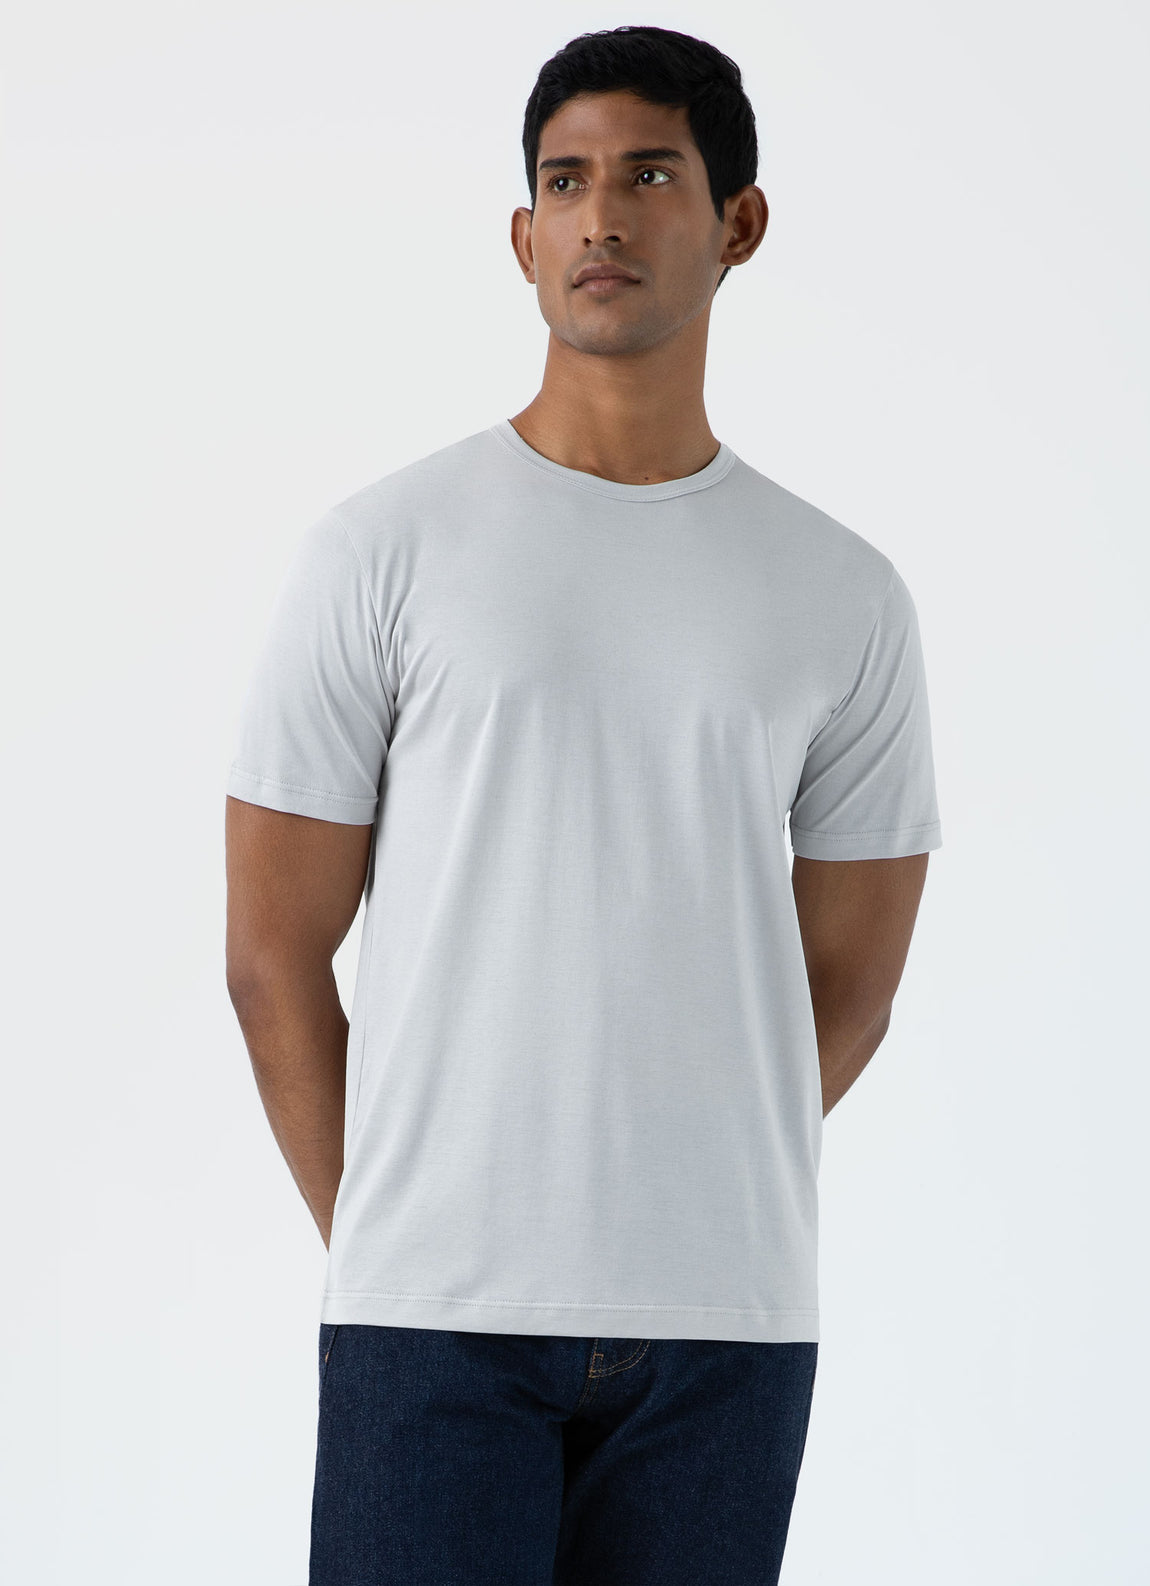 Men's Classic T-shirt in Smoke | Sunspel